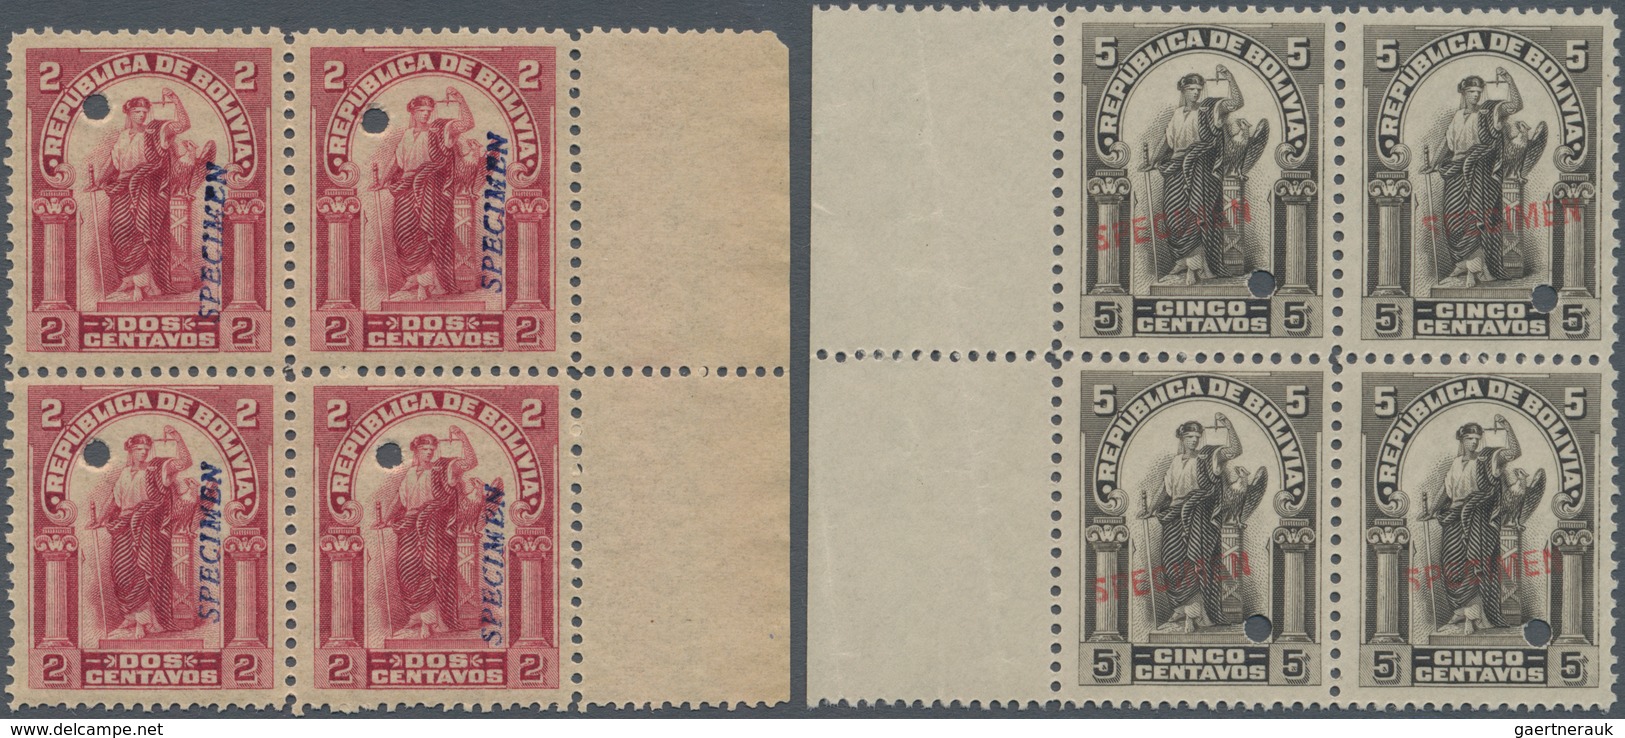 Bolivien - Stempelmarken: 1918, Revenue Stamps 'Allegory' Two Different Blocks Of Four Incl. 2c. Car - Bolivia